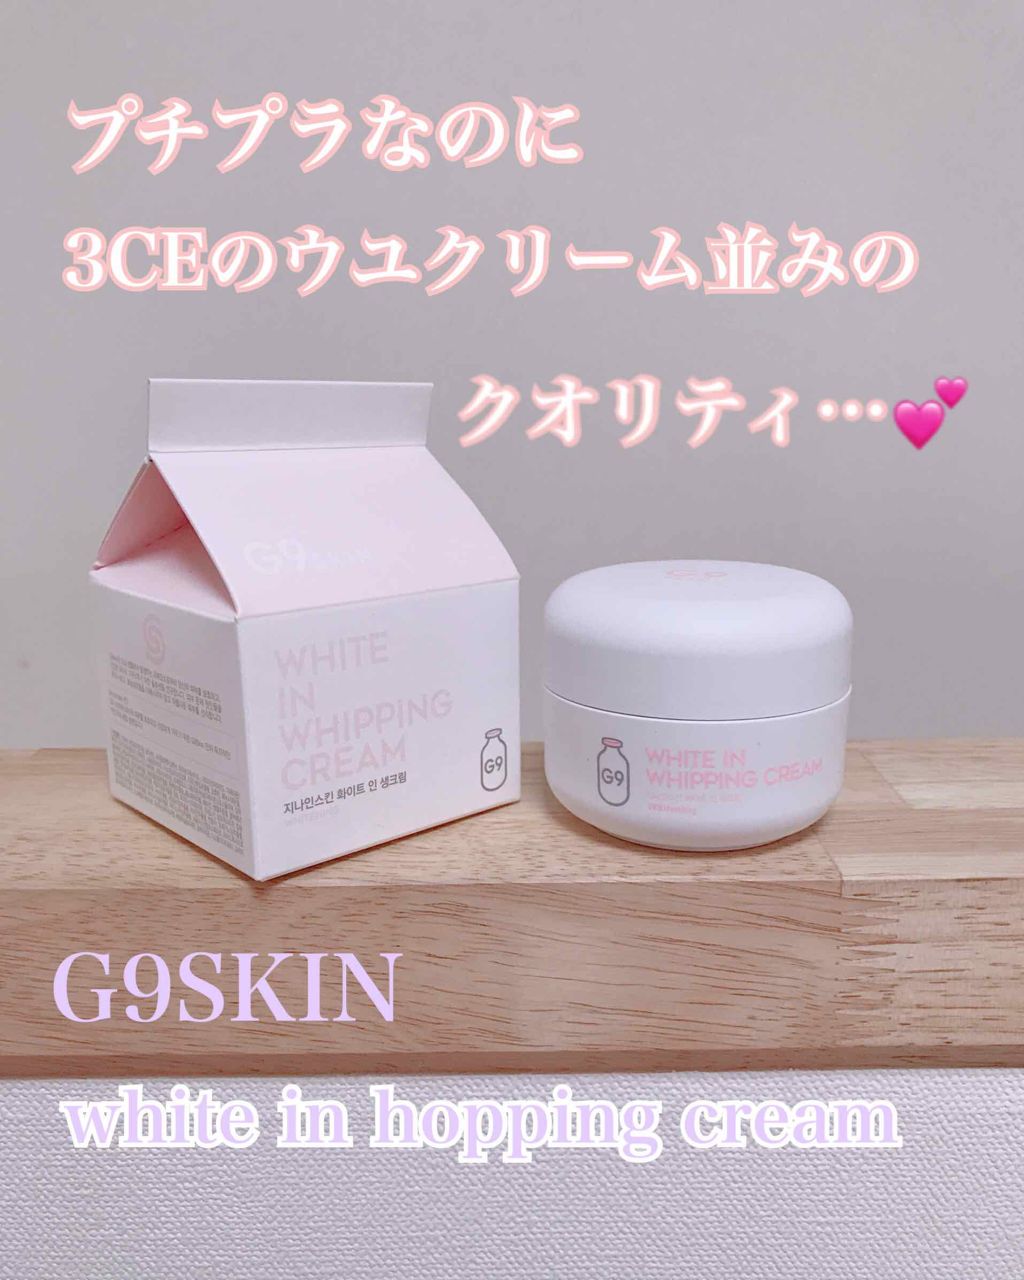 White Whipping Cream ウユクリーム G9 Skinの口コミ こちらはg9skinのウユクリームです ウ By えるふぃ 混合肌 Lips